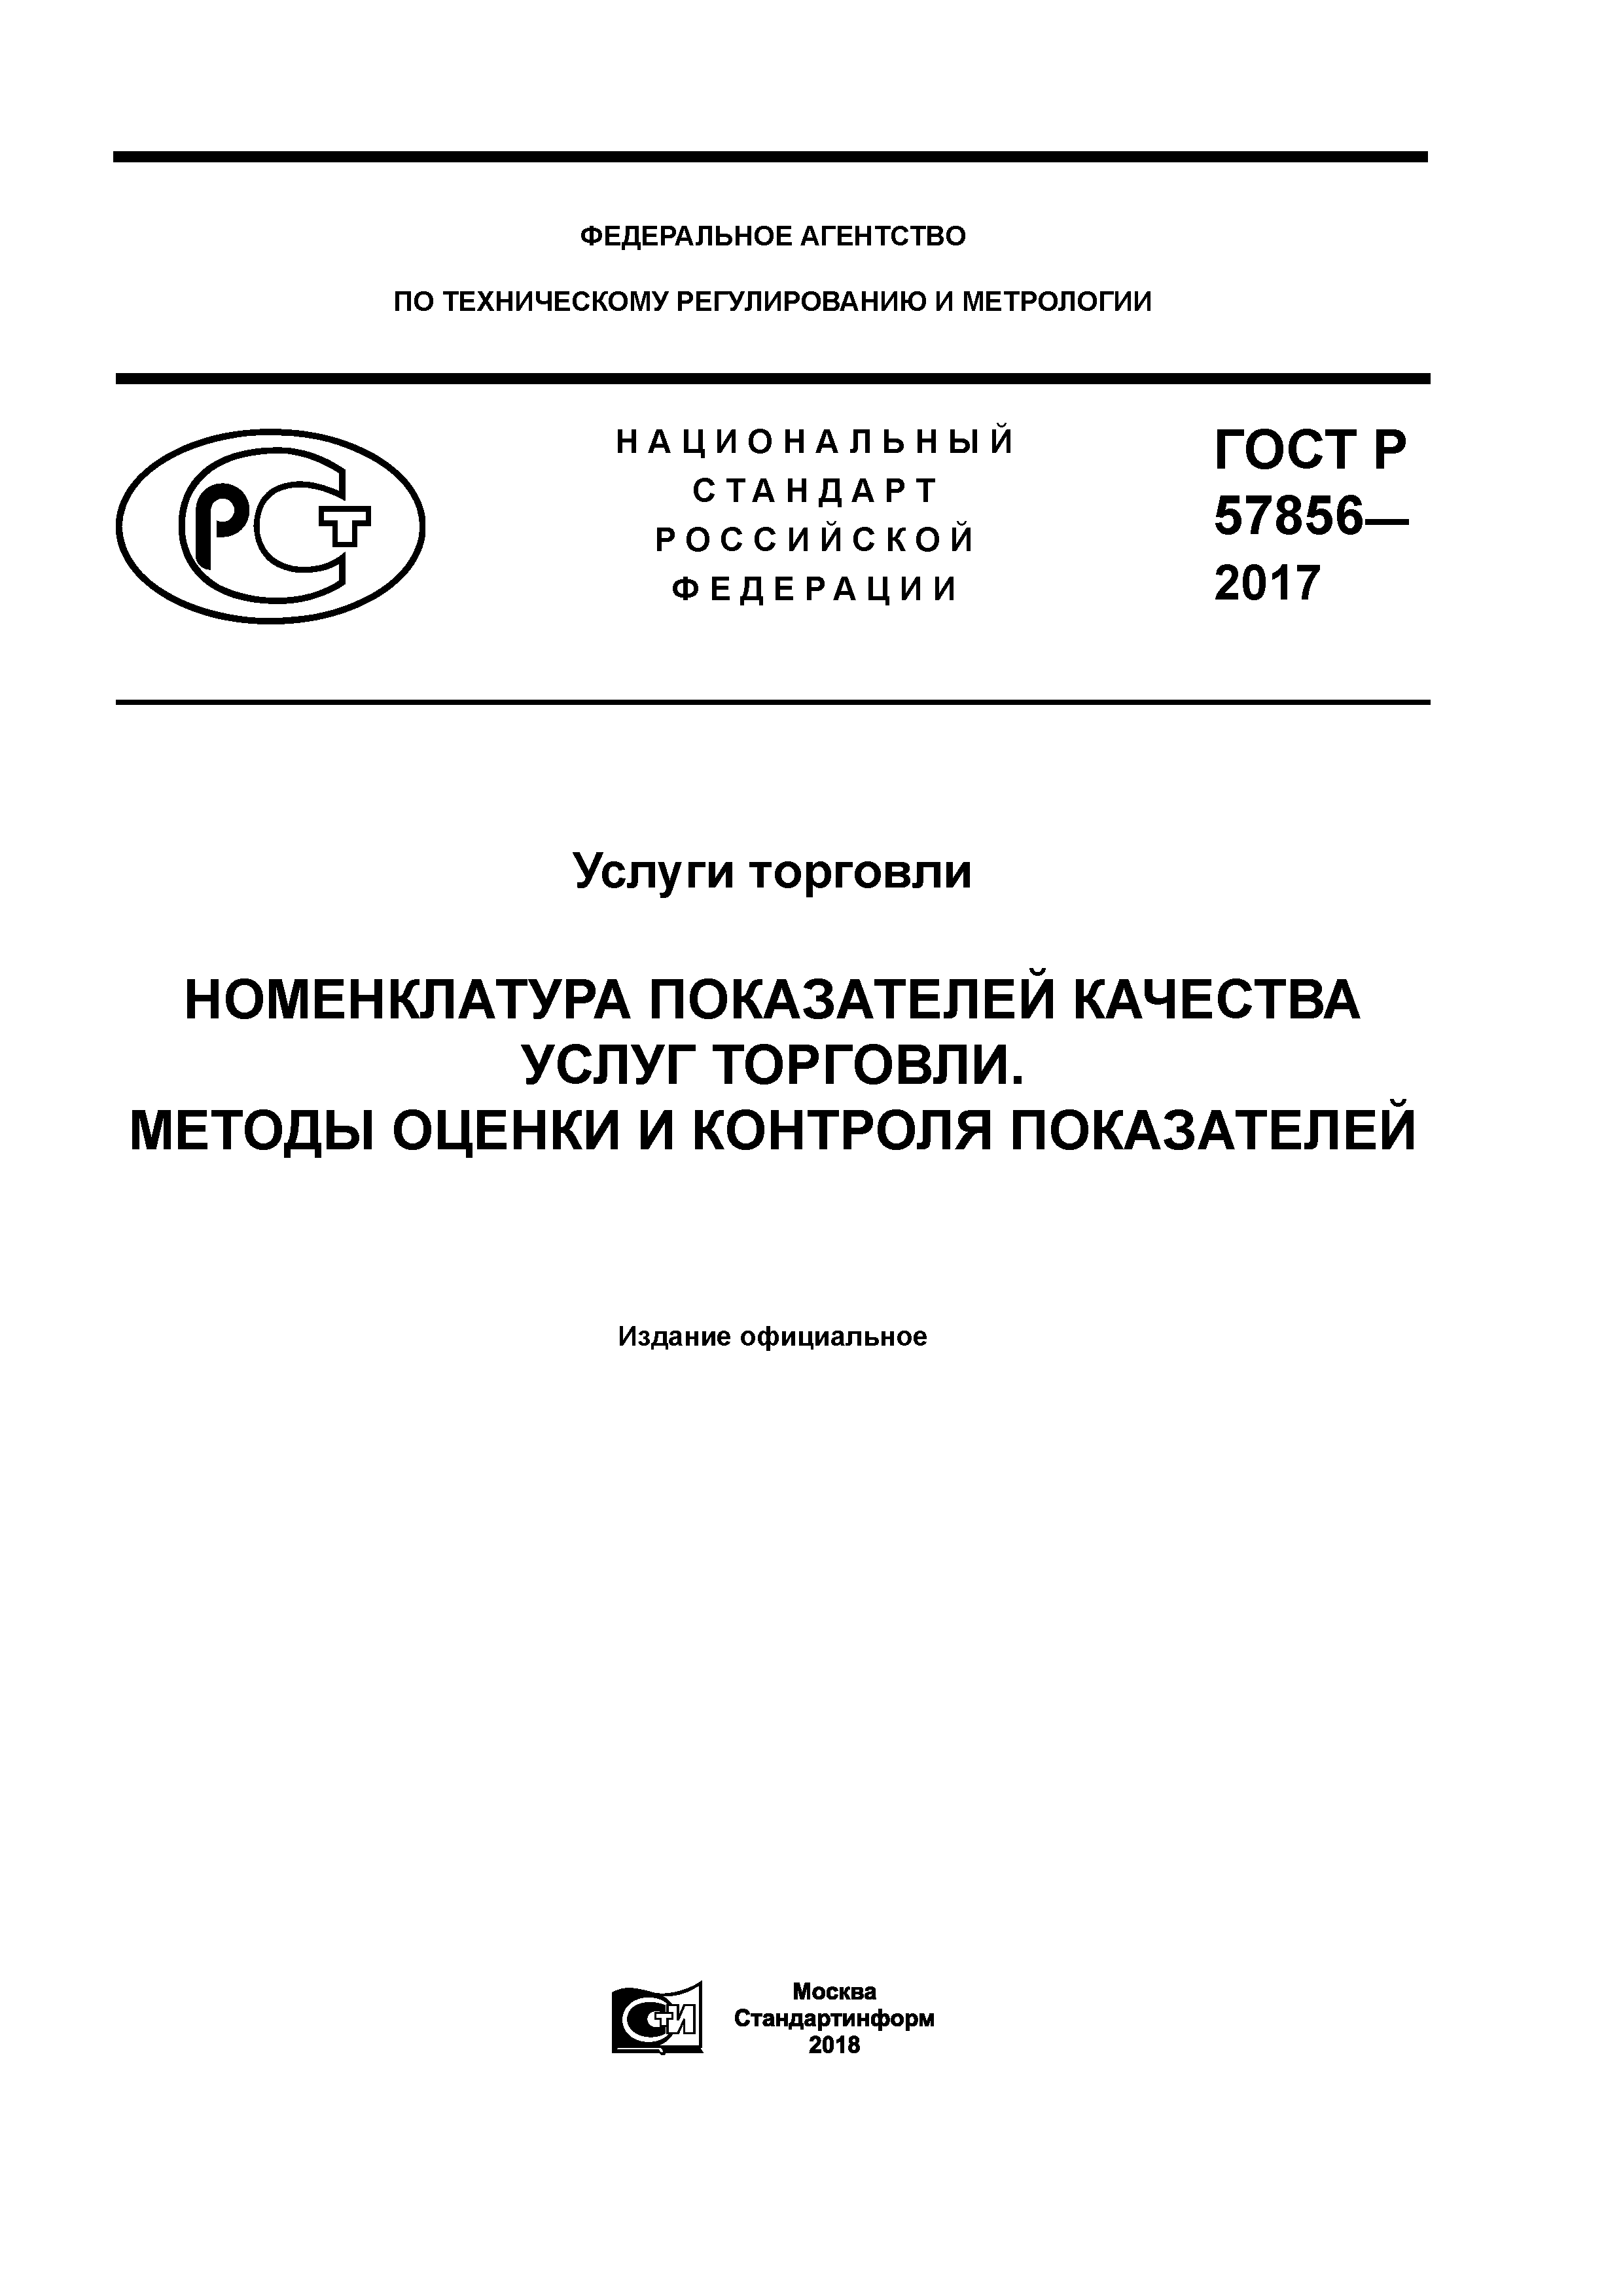 ГОСТ Р 57856-2017